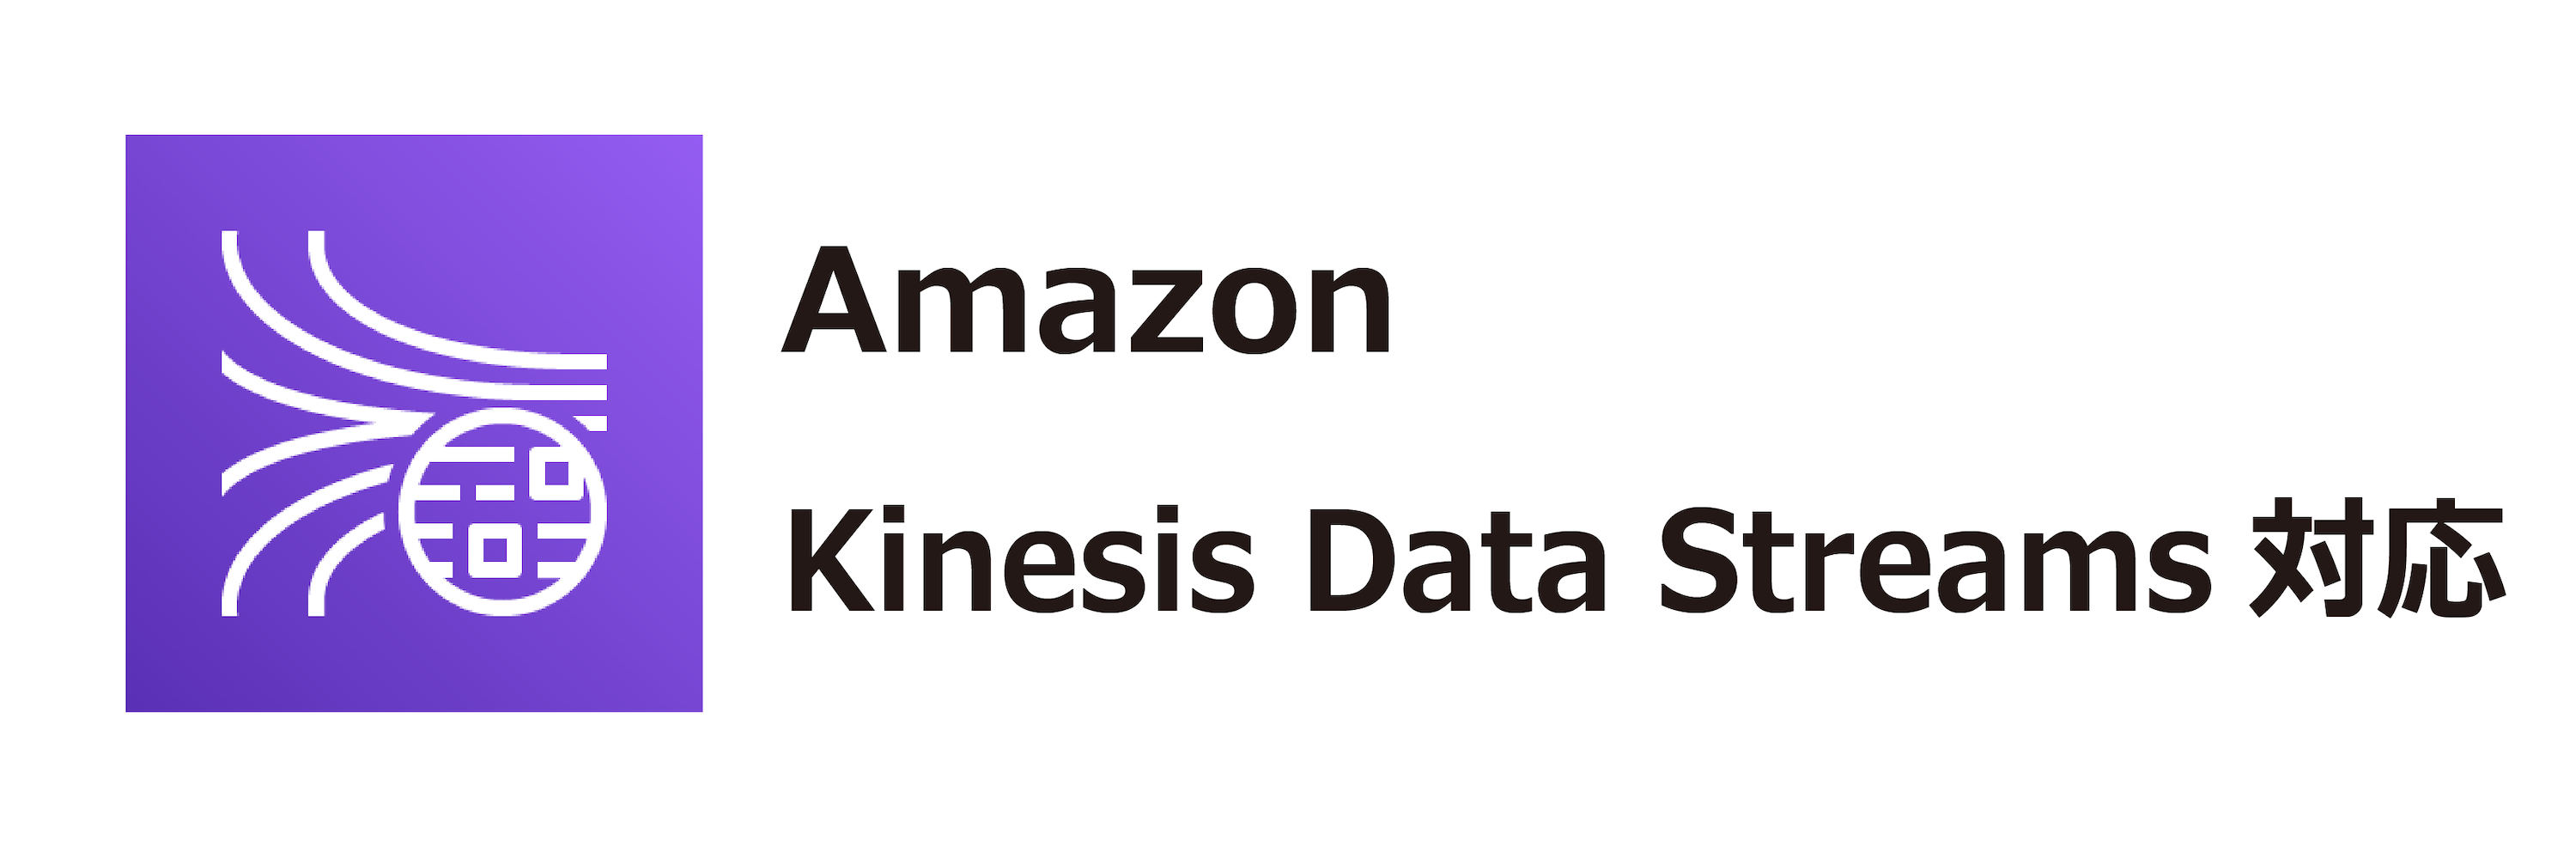 Amazon Kinesis Data Streams対応